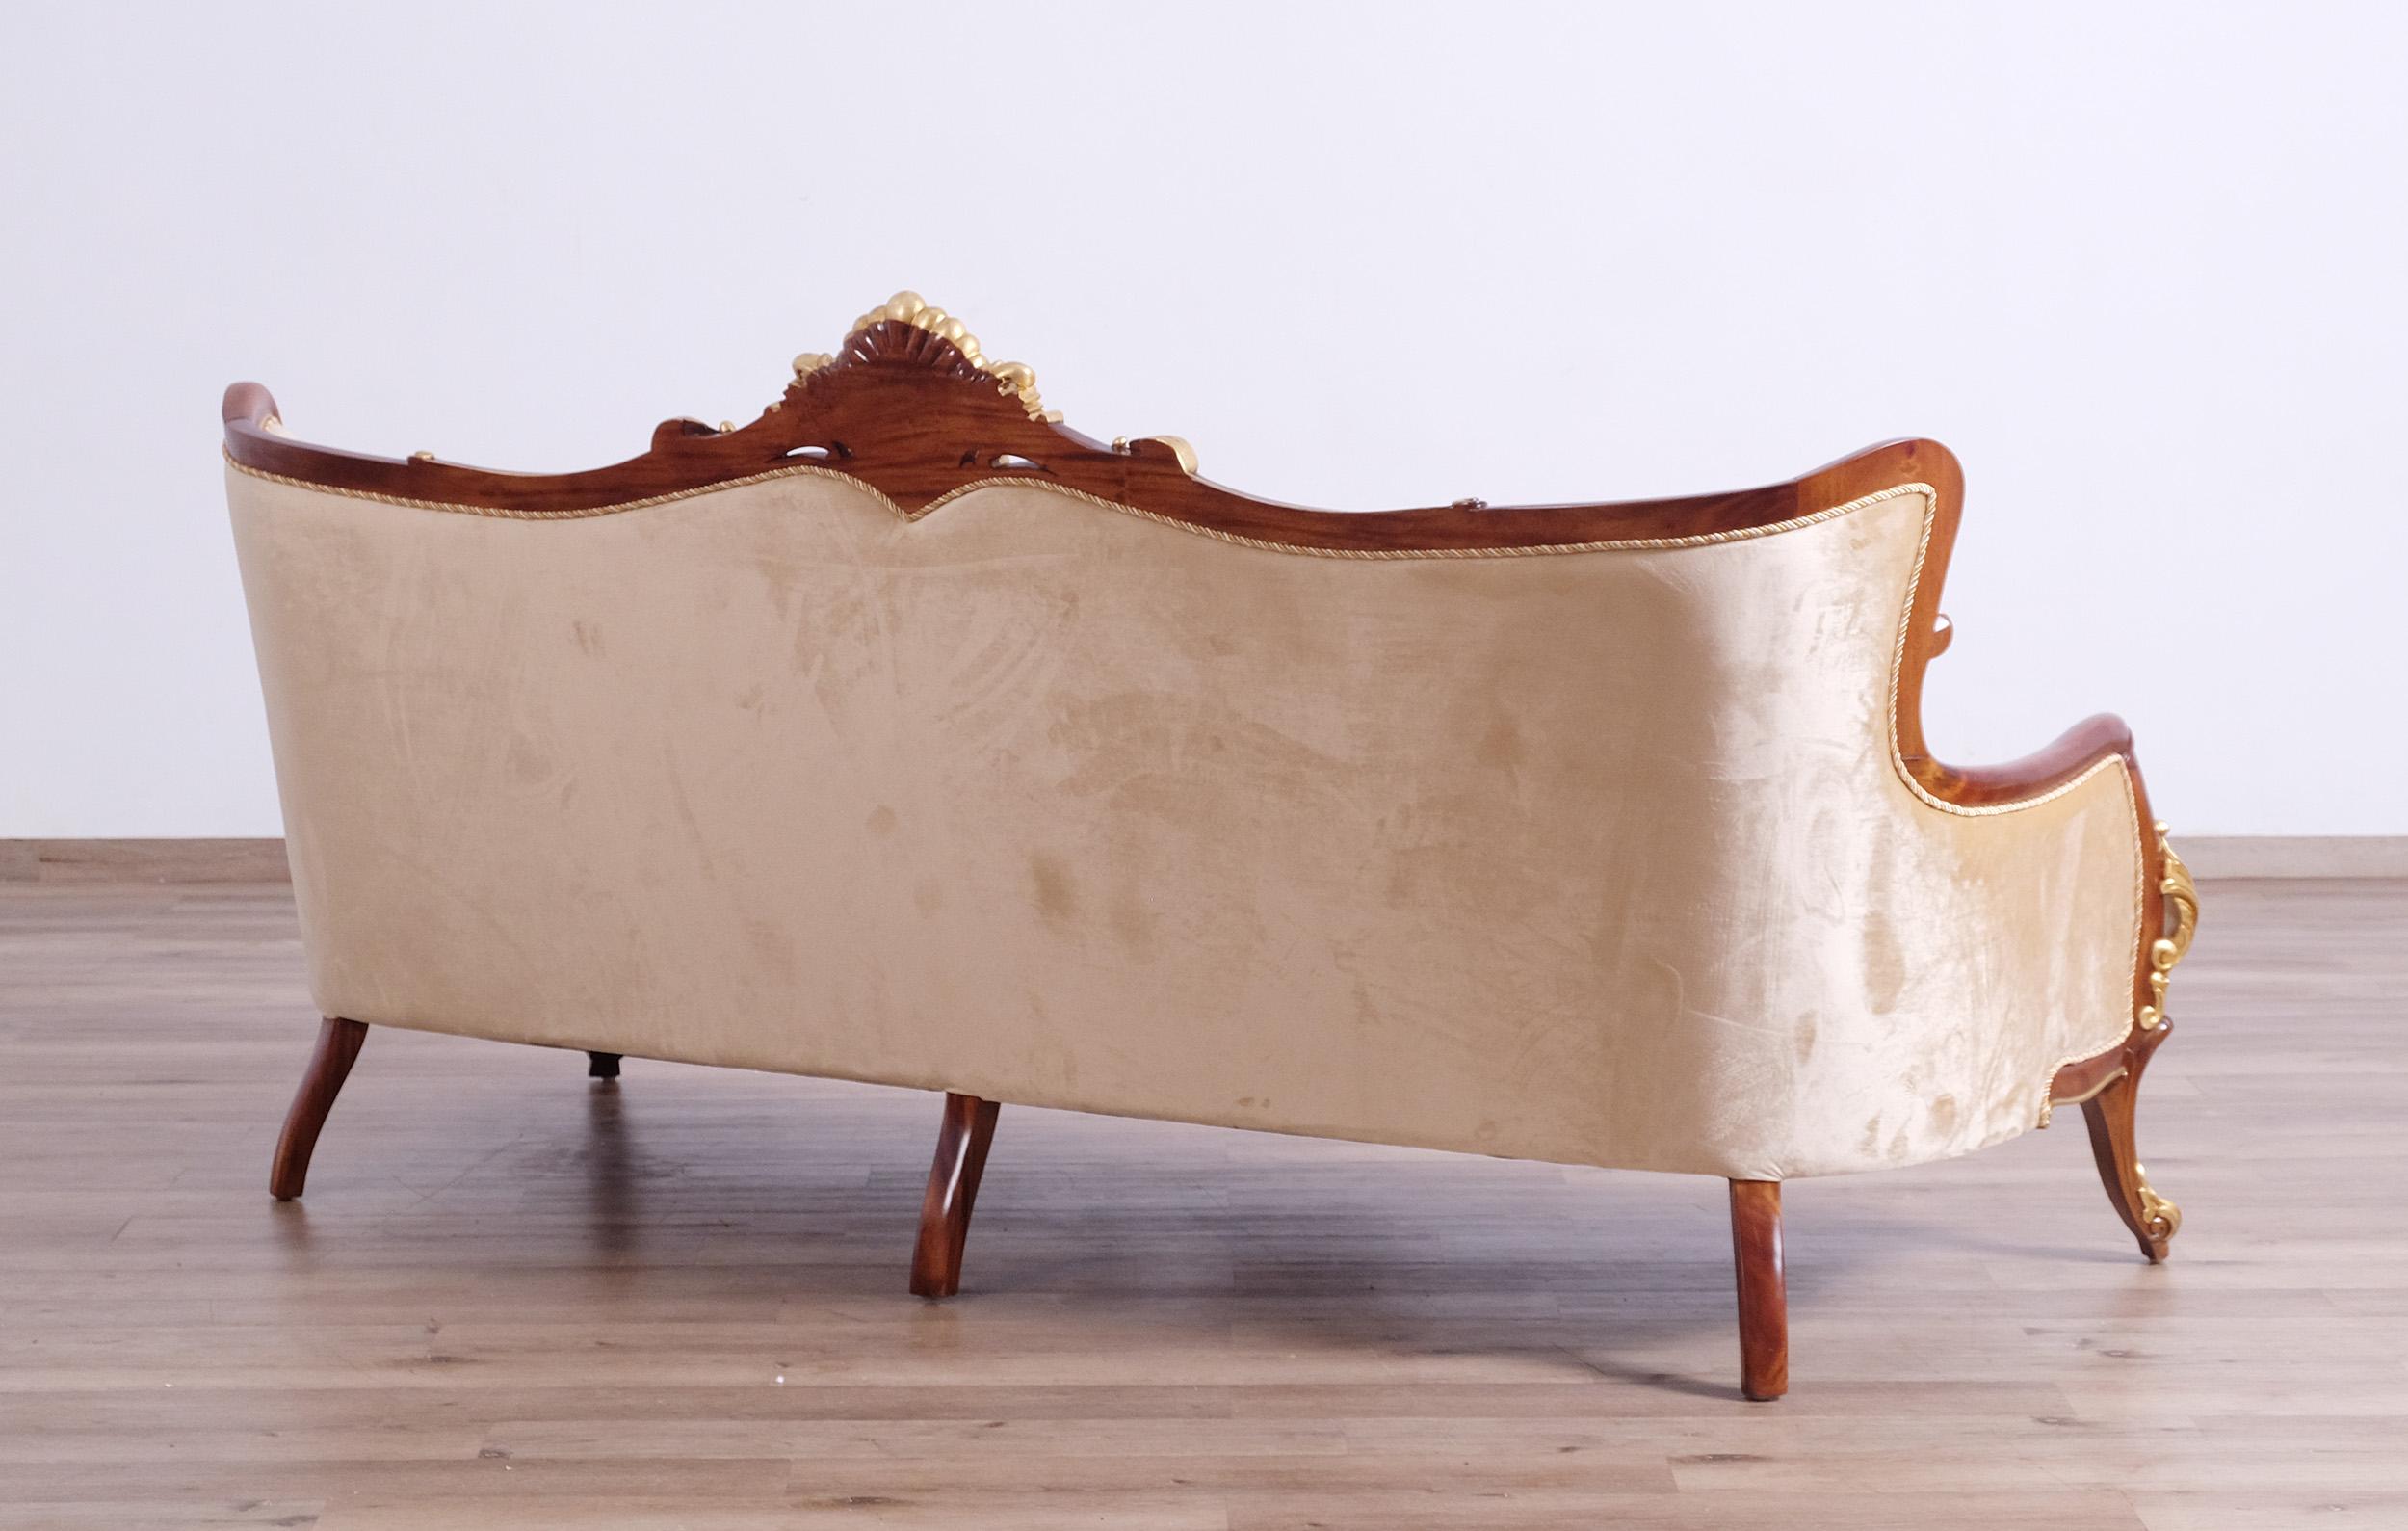 

    
 Shop  Luxury Antique Walnut & Gold VERONICA Sofa Set 4Pcs EUROPEAN FURNITURE Traditional
